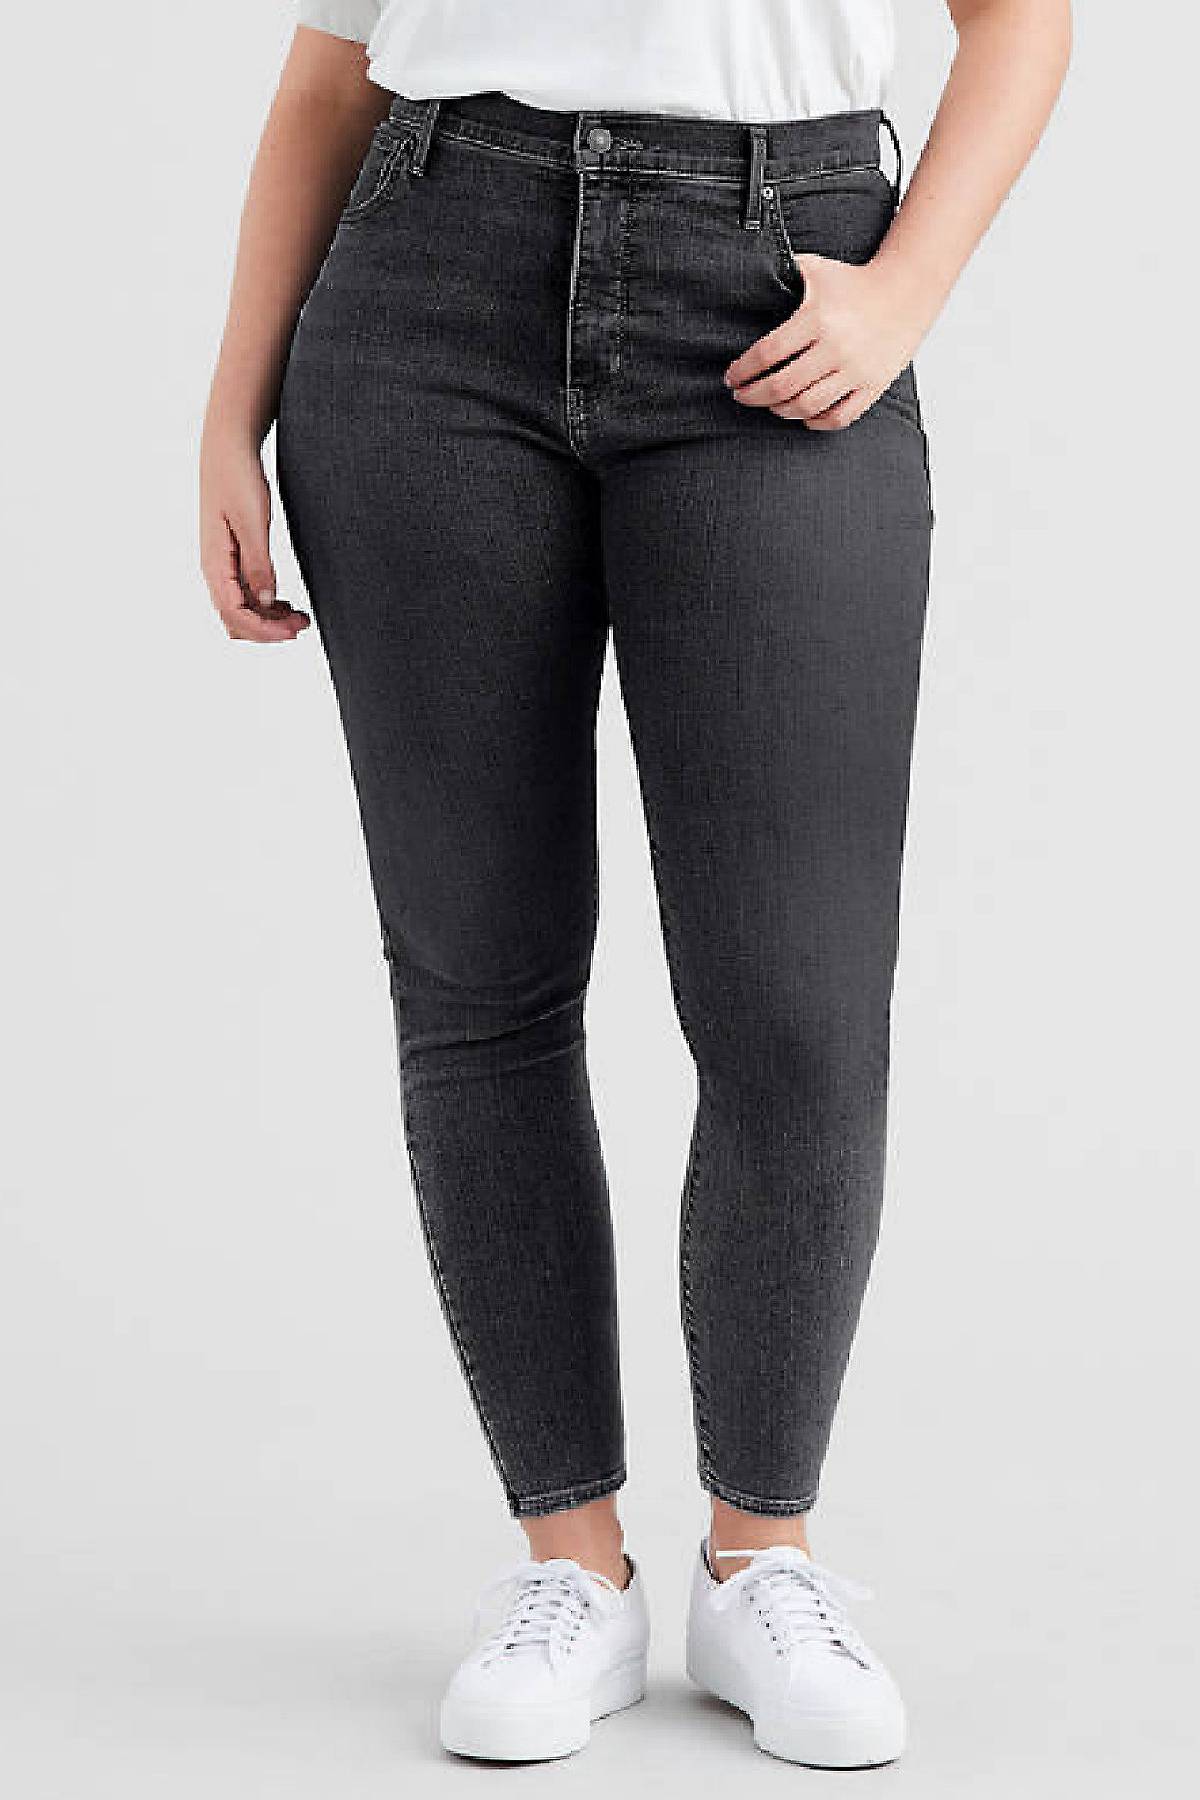 Model wearing 720 high rise super skinny jeans